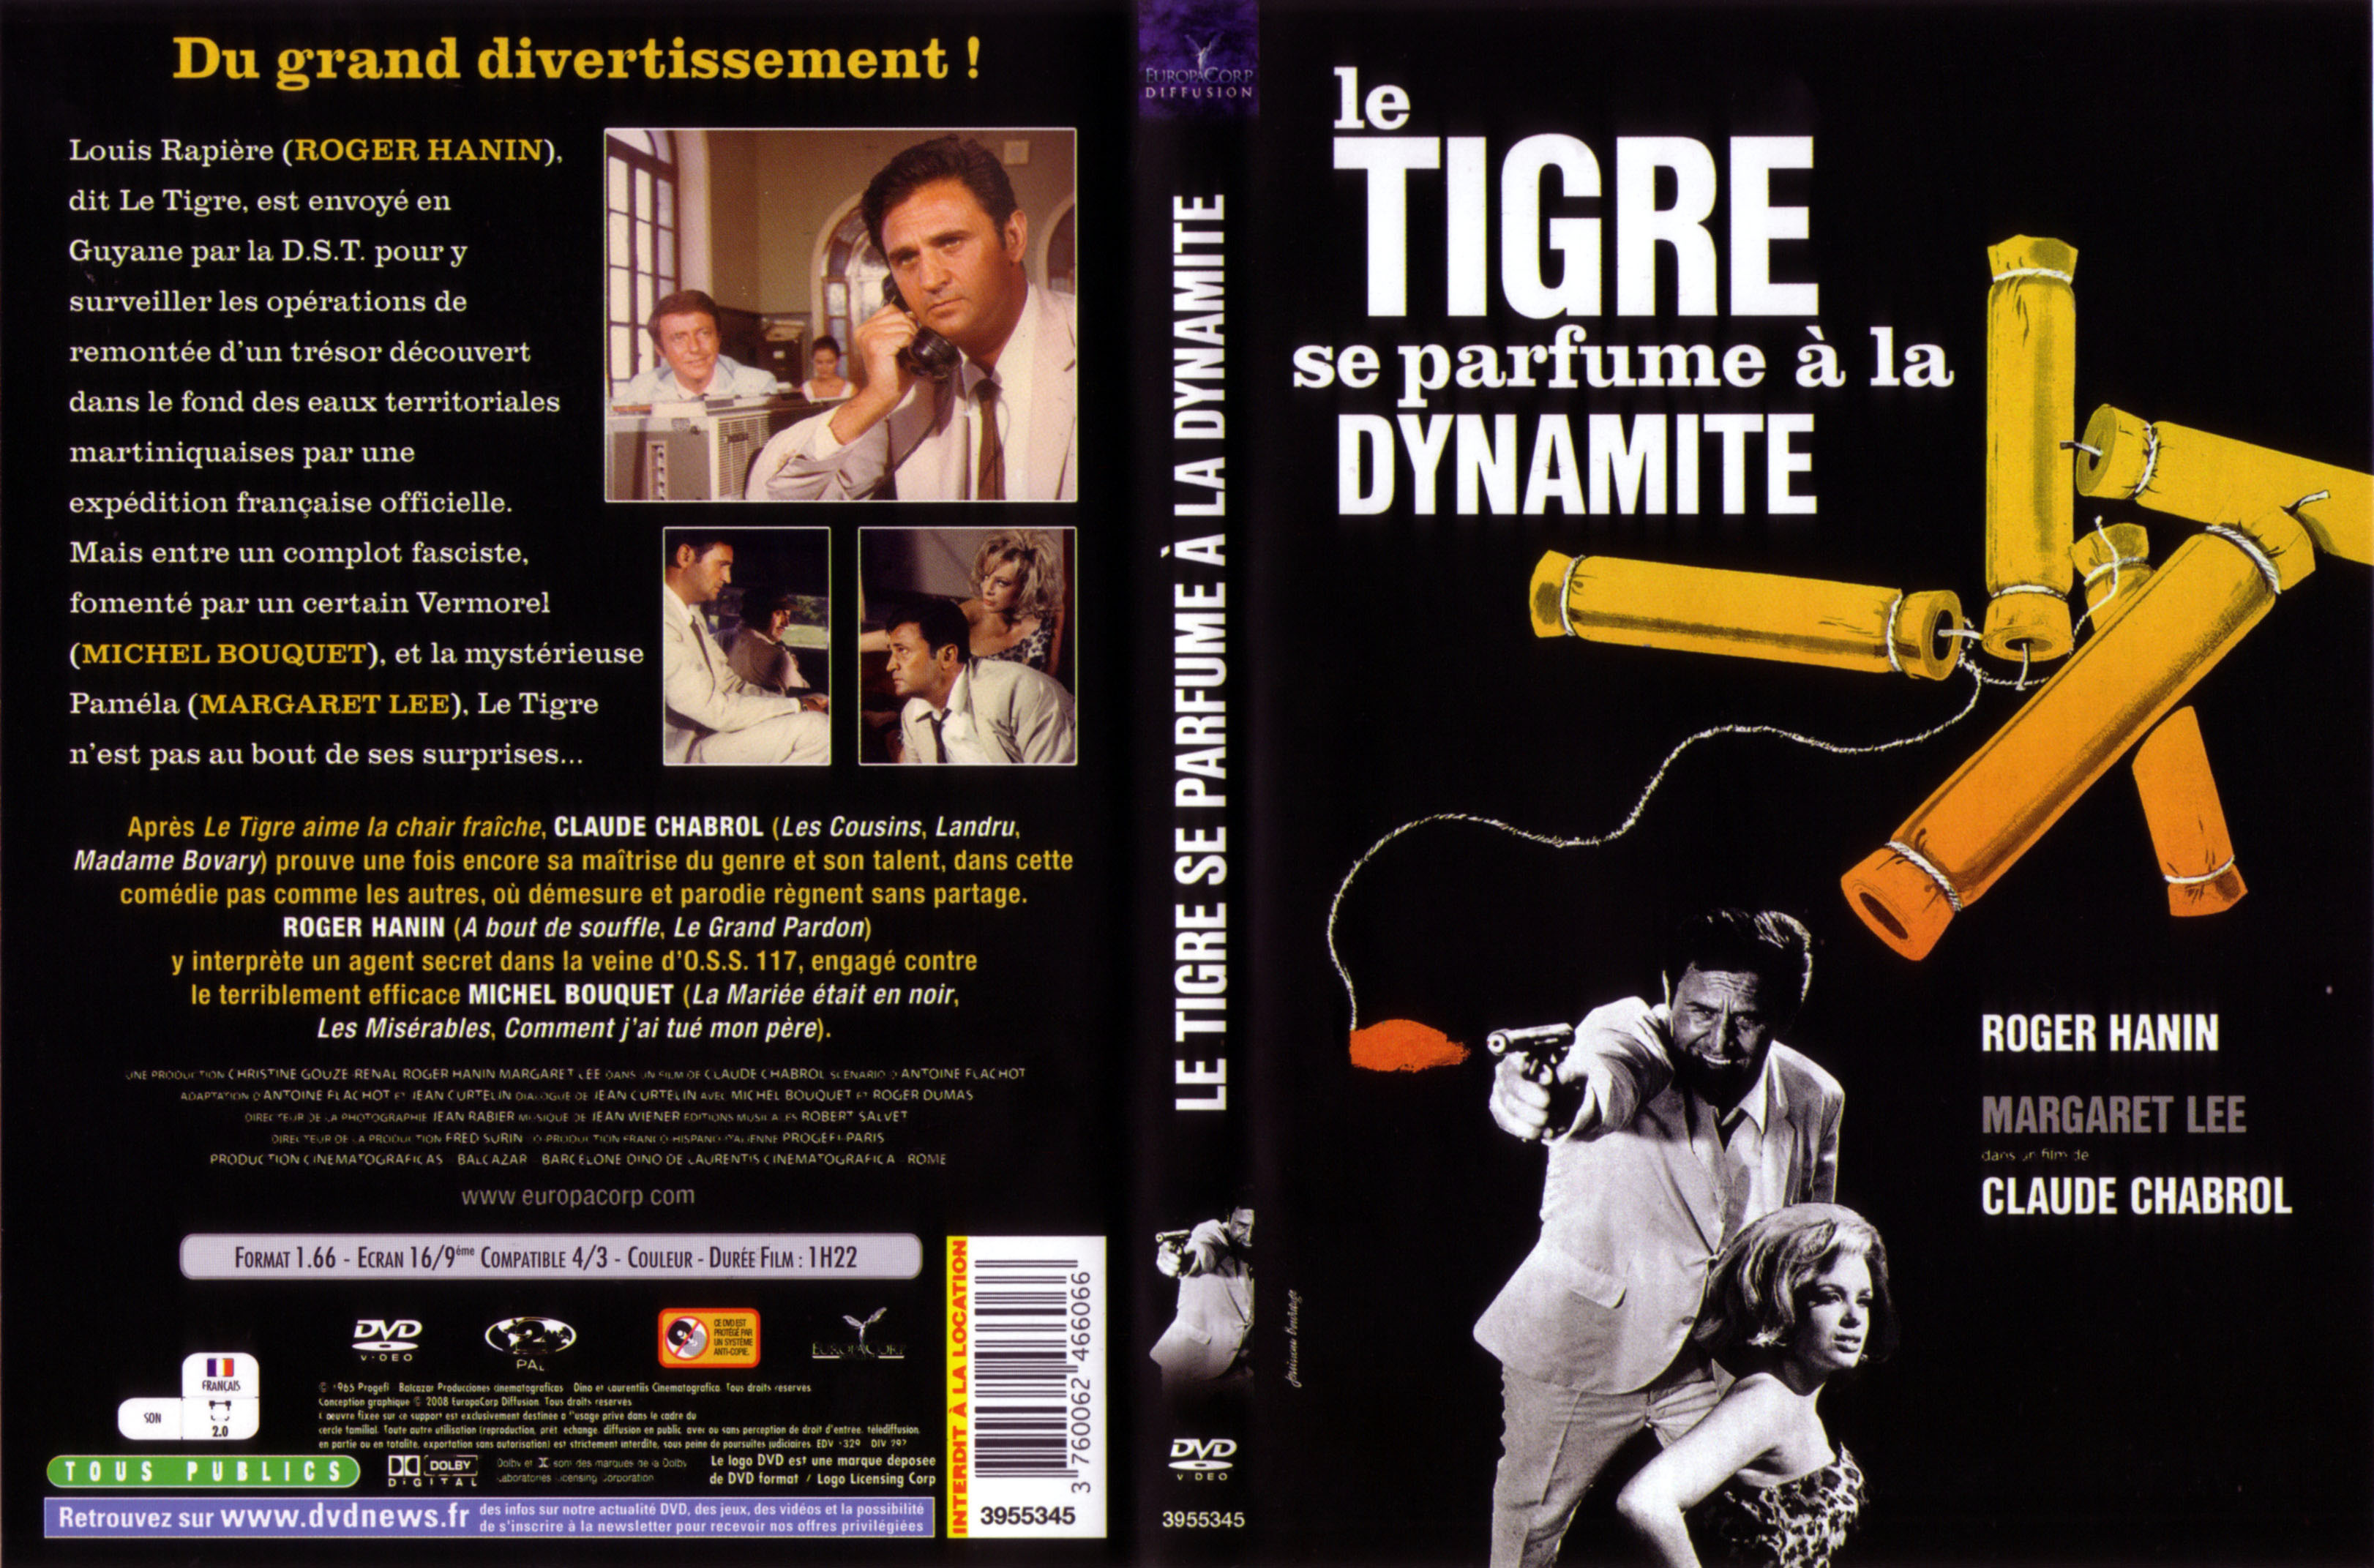 Jaquette DVD Le tigre se parfume  la dynamite v2